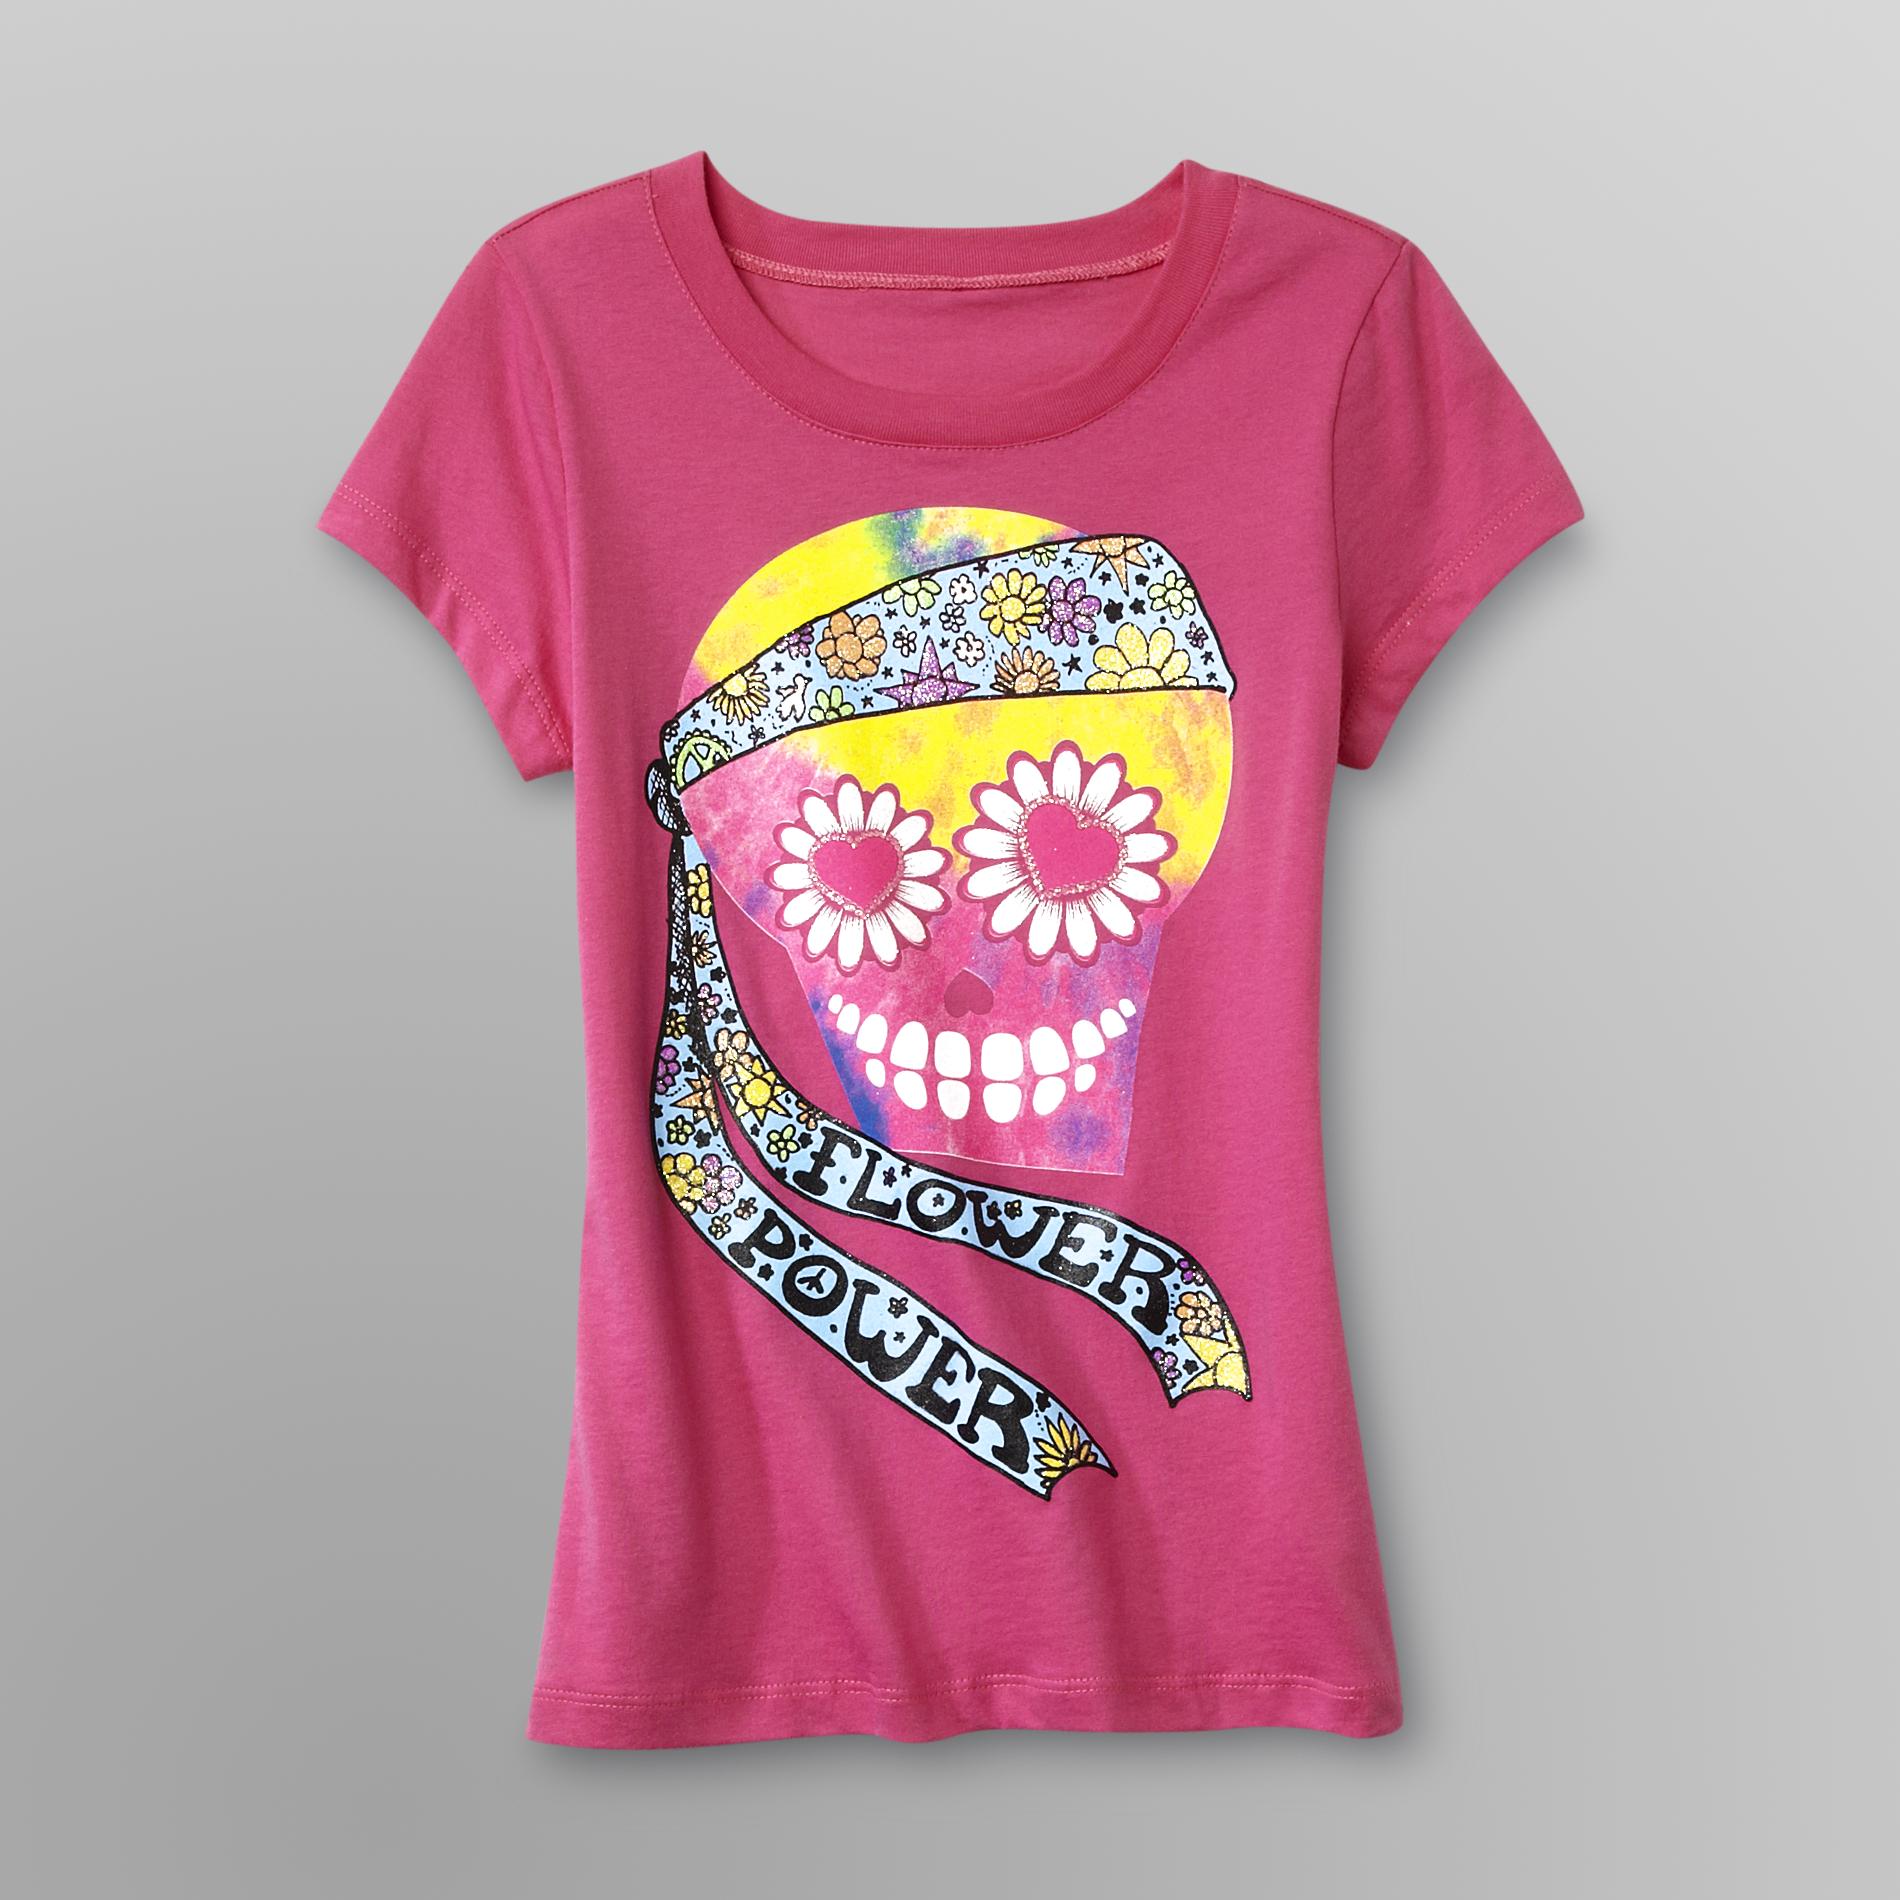 Route 66 Girl's Graphic T-Shirt - Hippie Skull